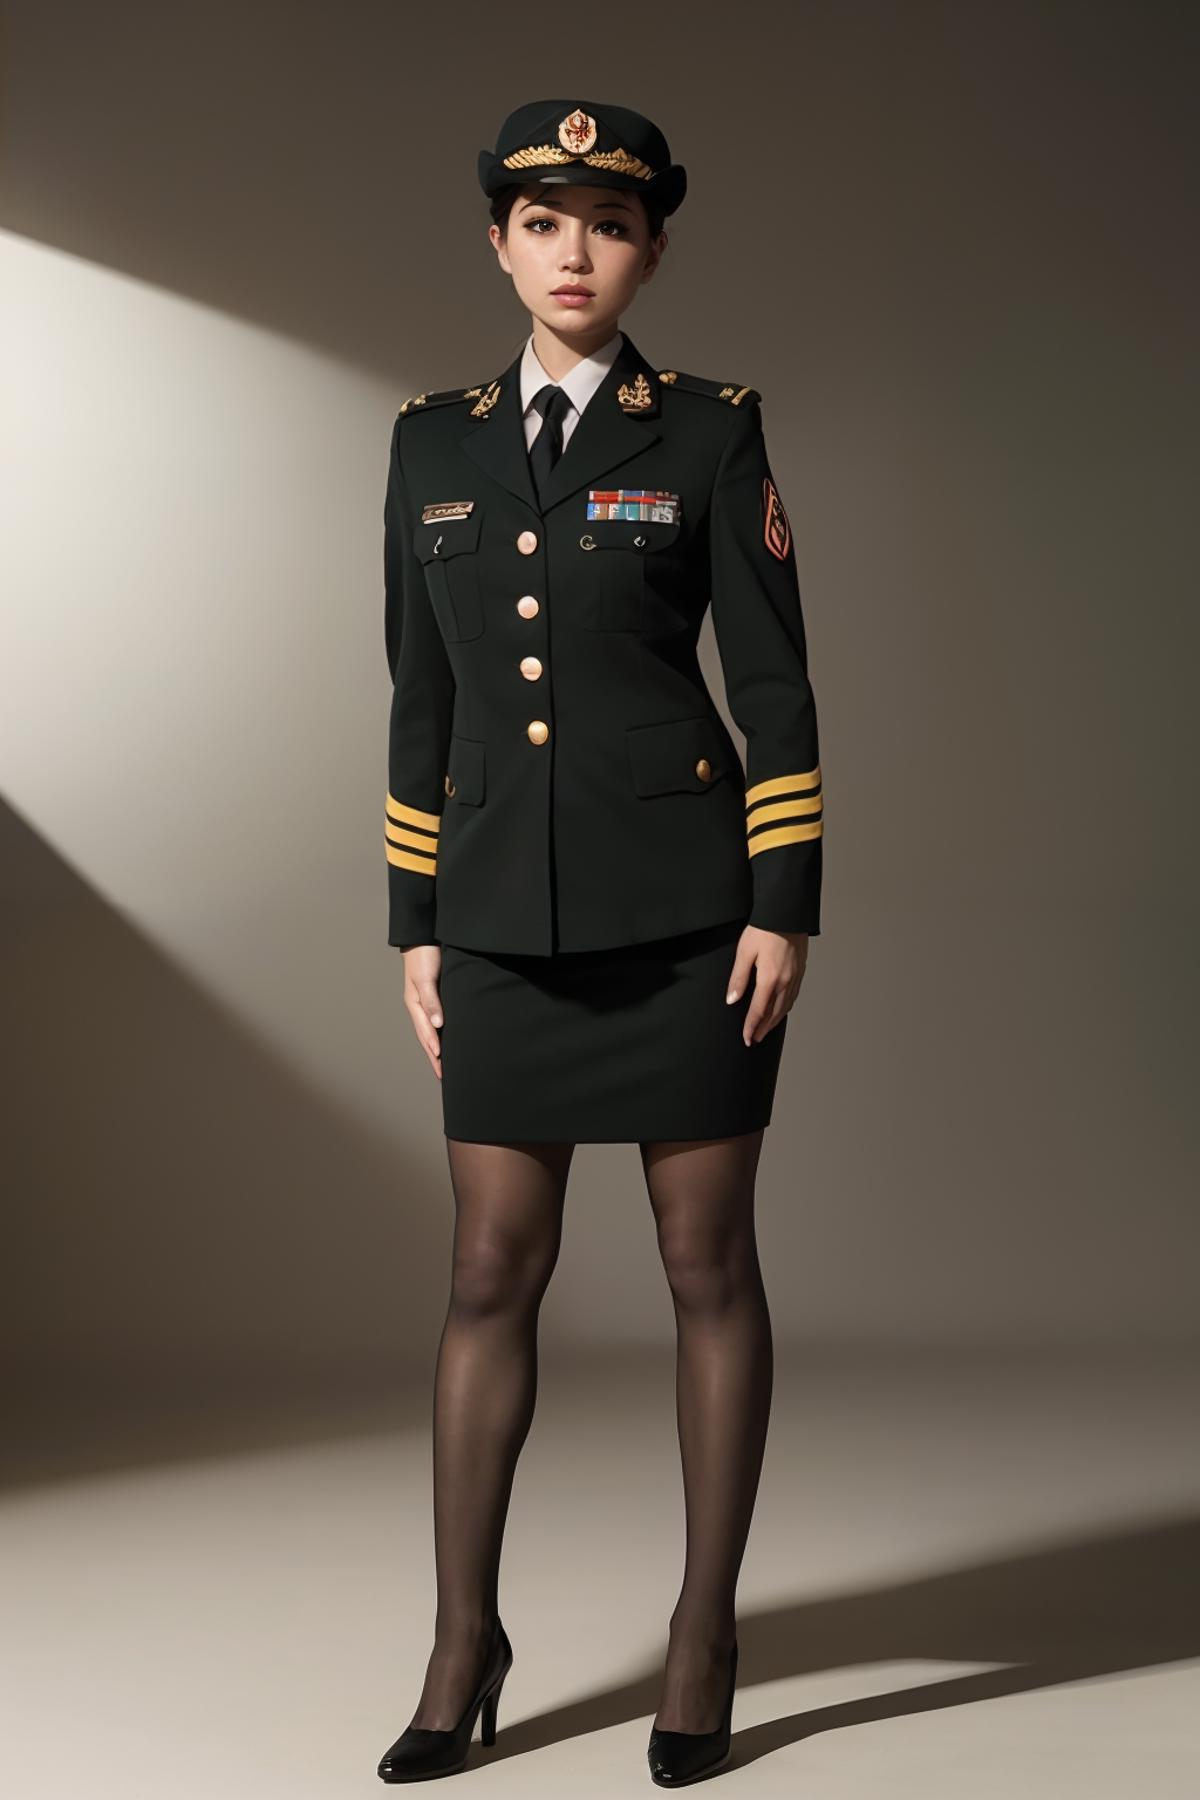 military uniform lora image by 1424076329218